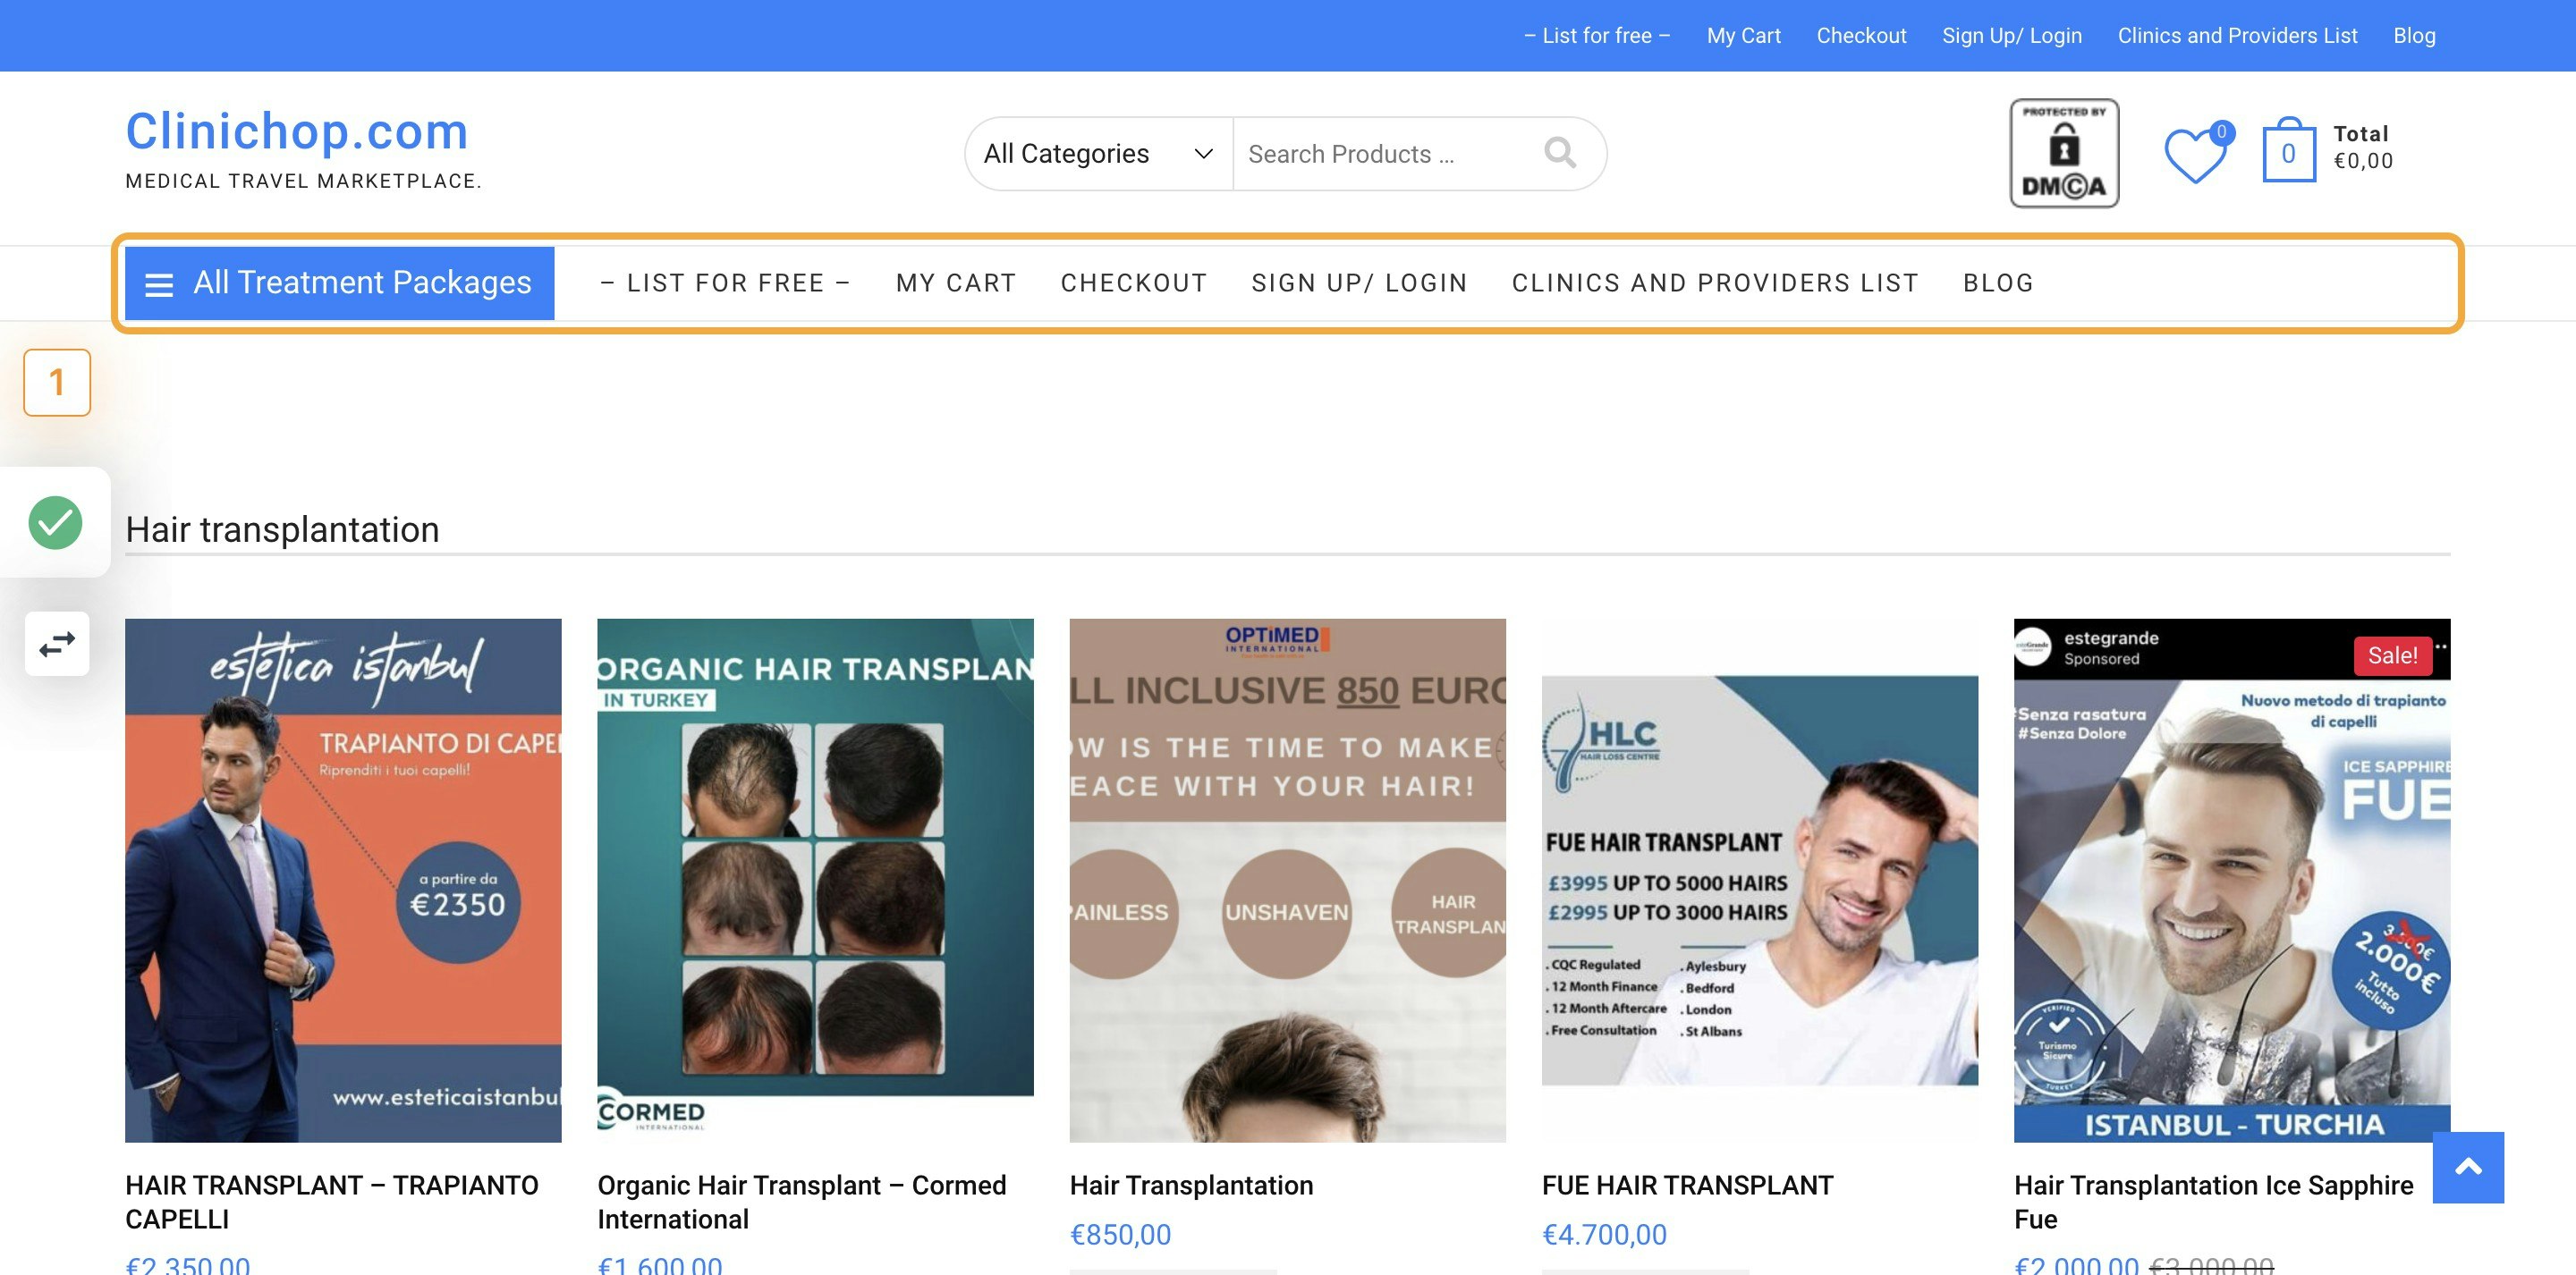 Go to Home - Medical Travel Marketplace. Clinichop.com Find hair transplantation